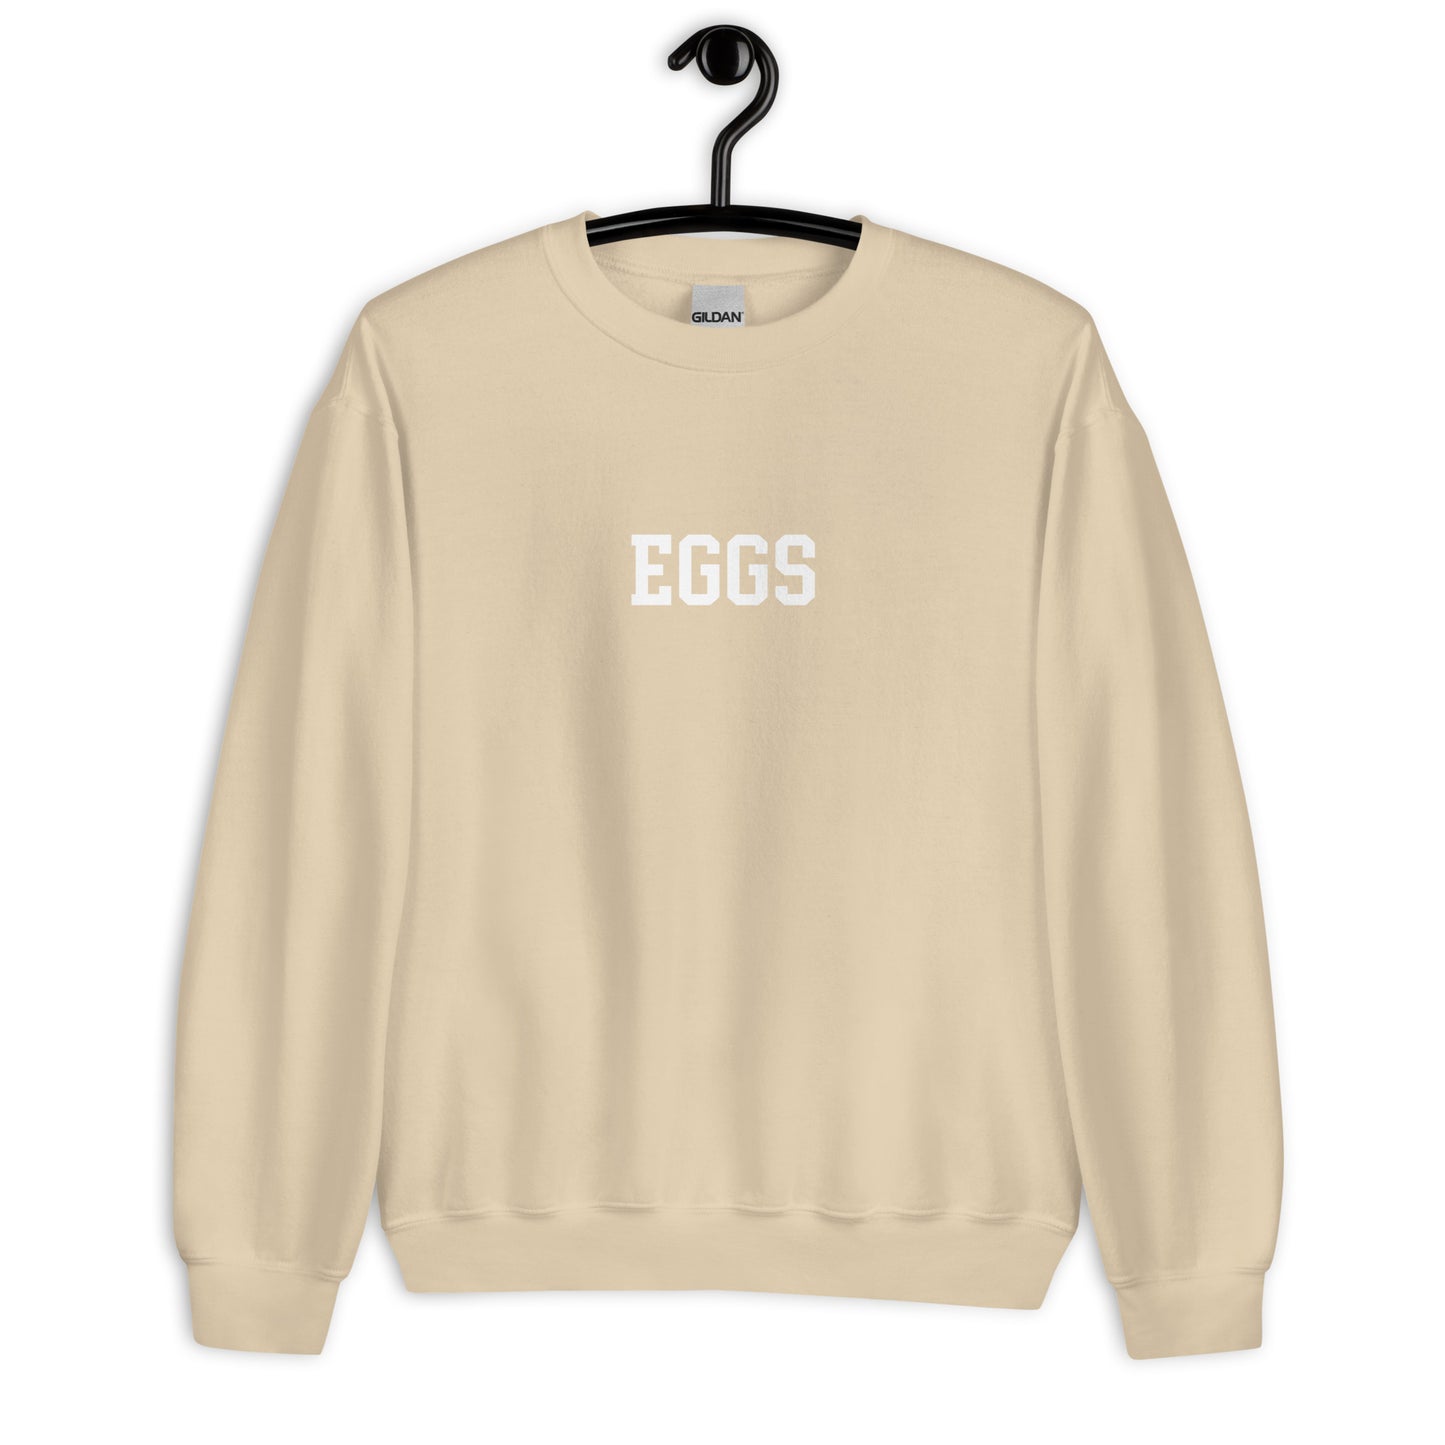 Eggs Sweatshirt - Straight Font